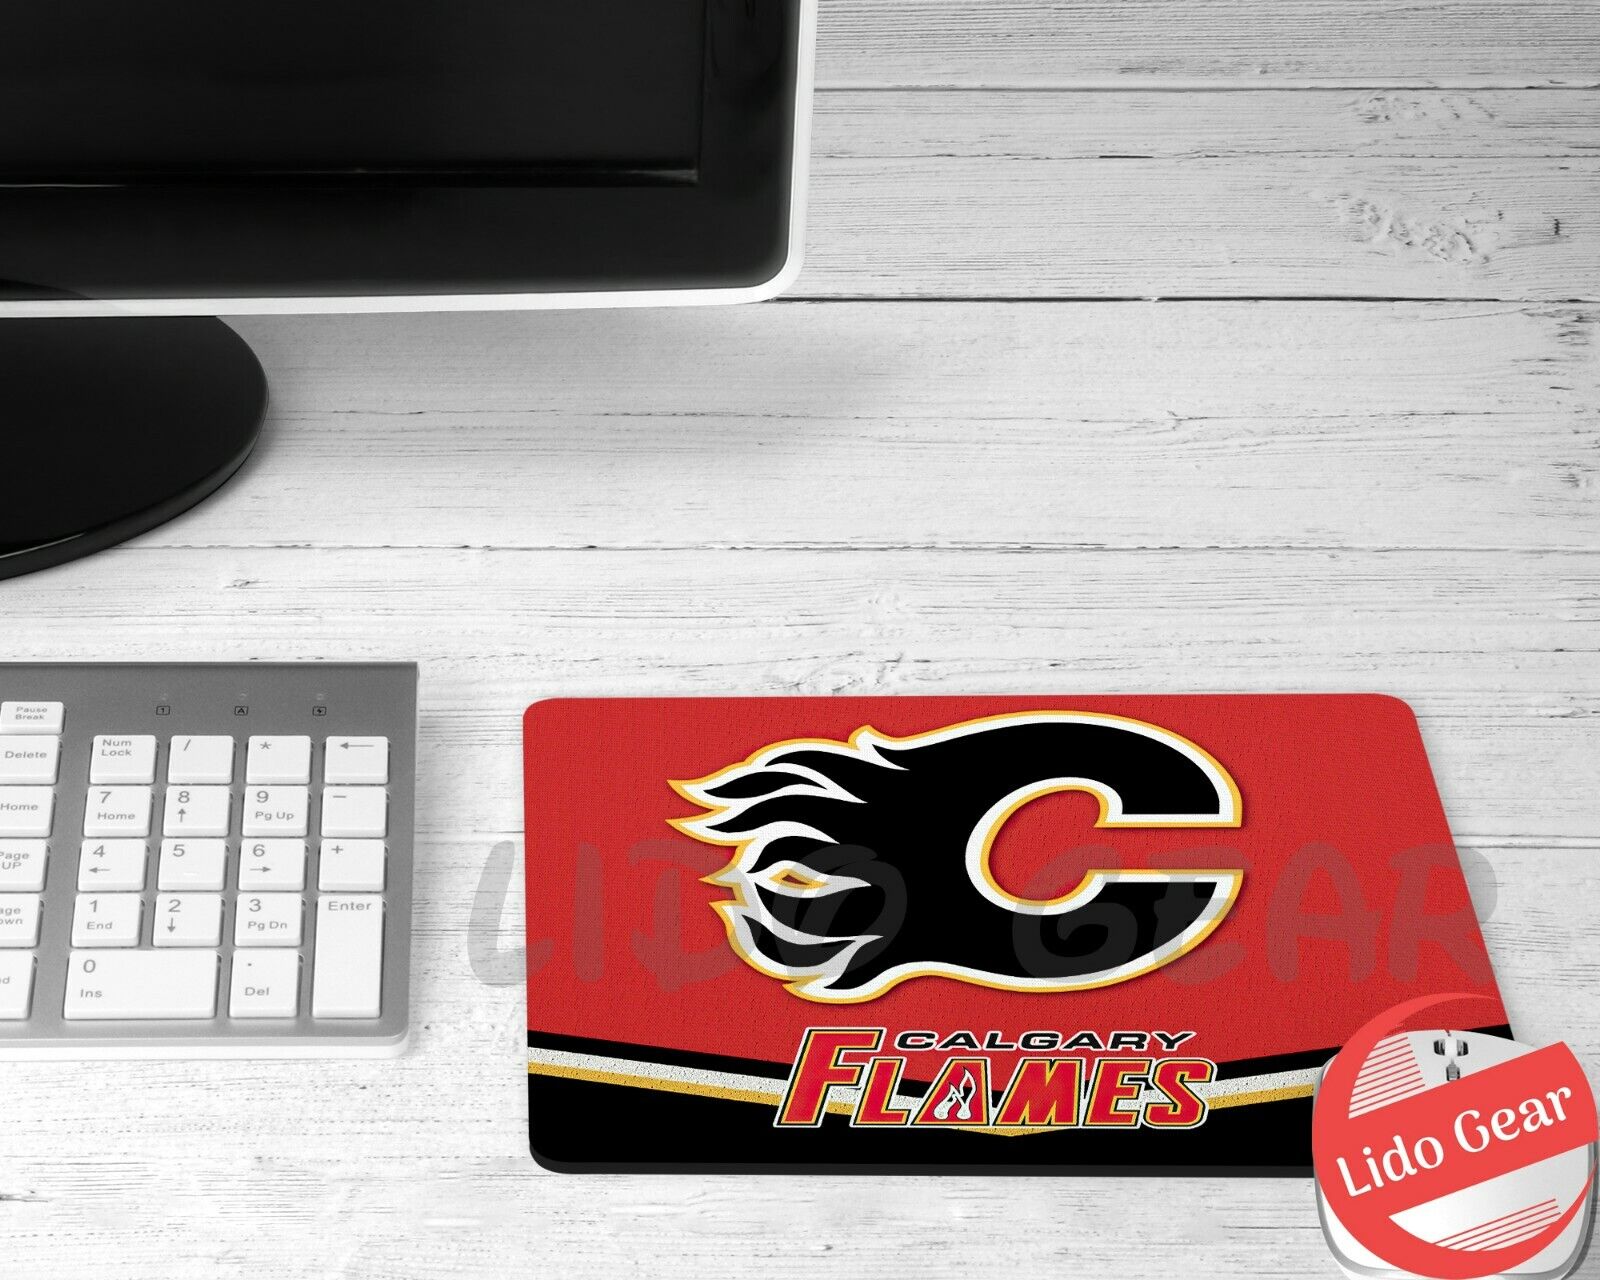 Calgary Flames MOUSE PAD RECTANGLE MOUSE PAD DESK MAT HOME SCHOO